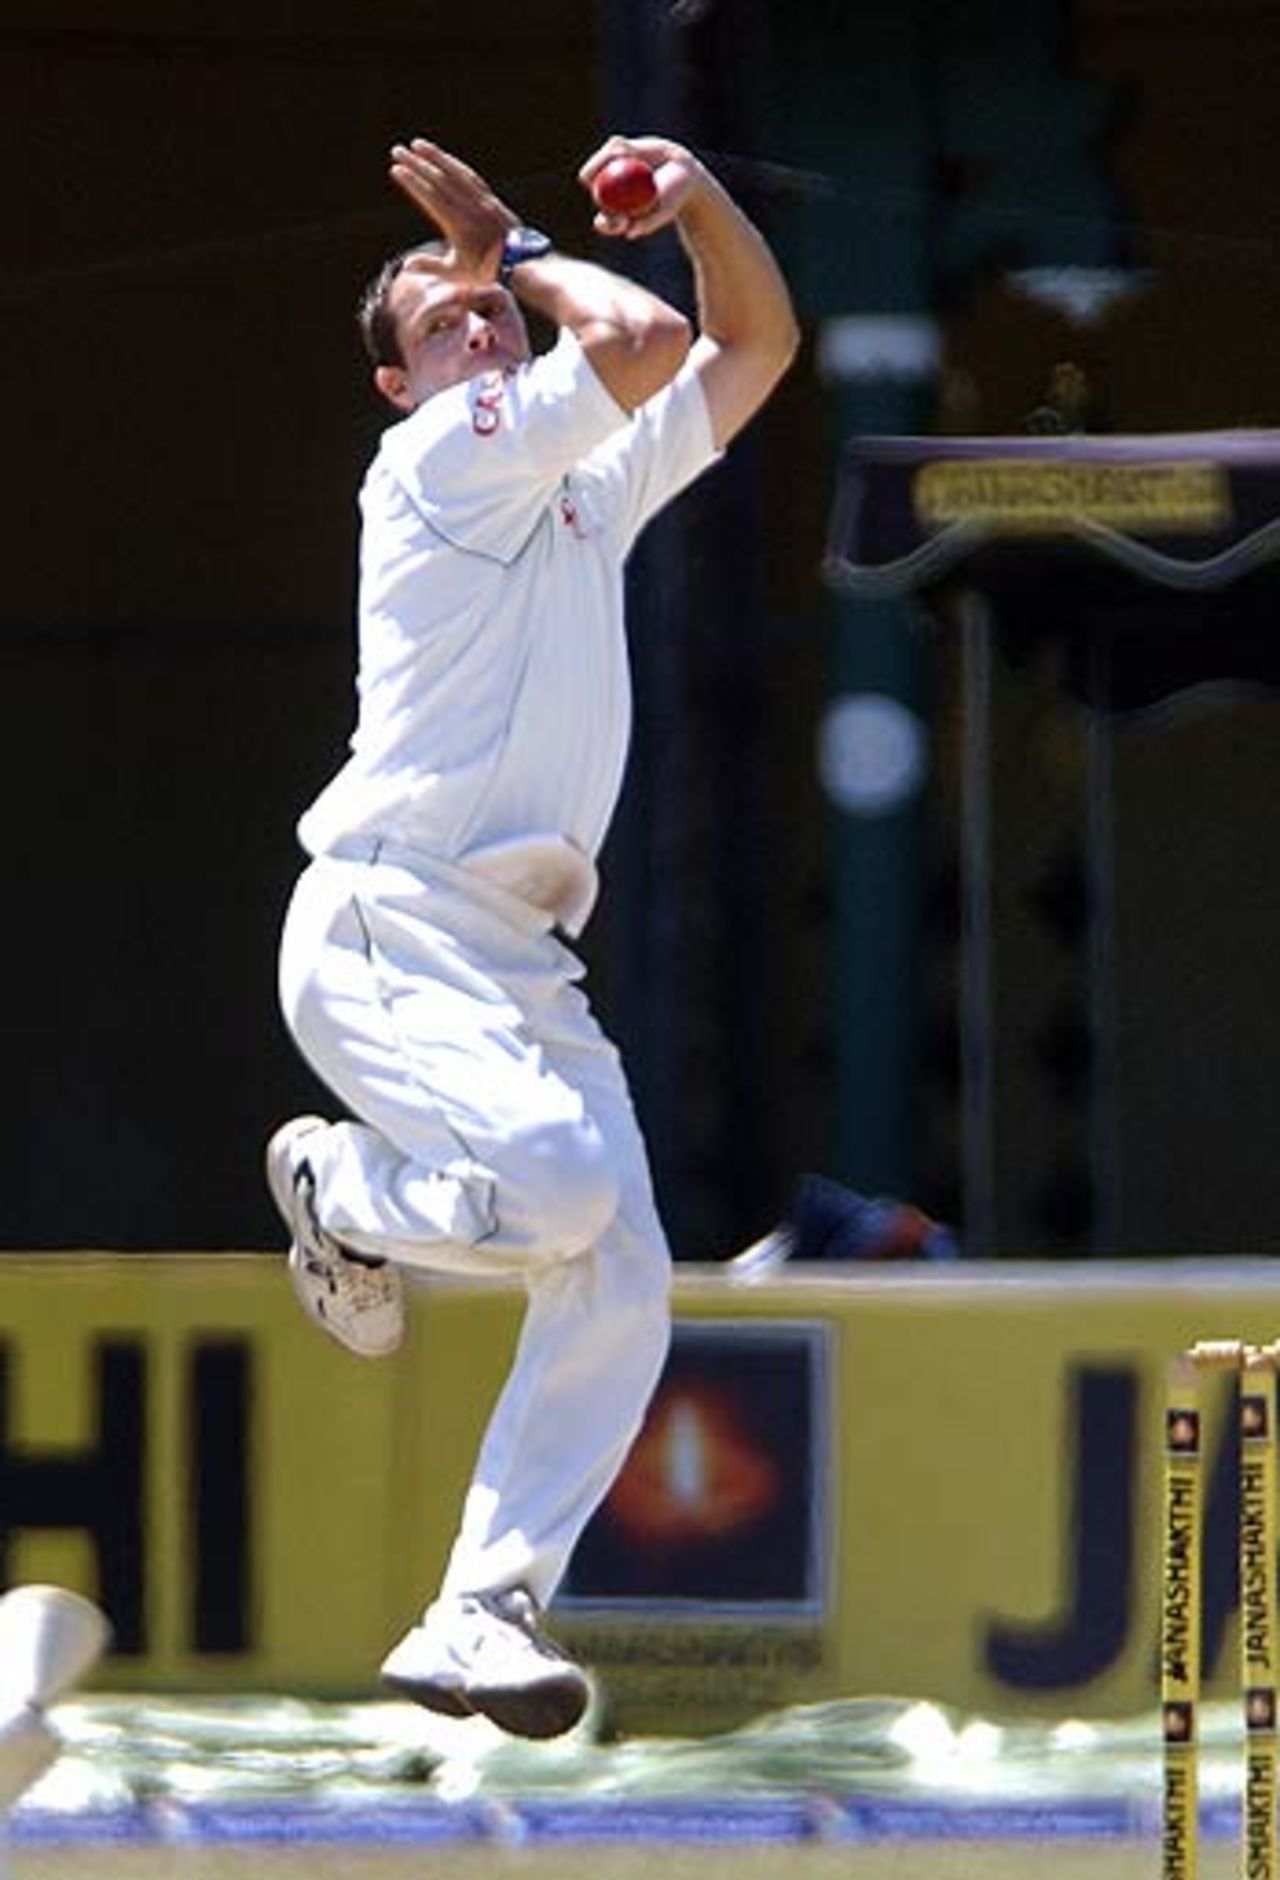 Nicky Boje prepares to let it rip, Sri Lanka v South Africa, 2nd Test, Colombo, 4th day, August 7, 2006